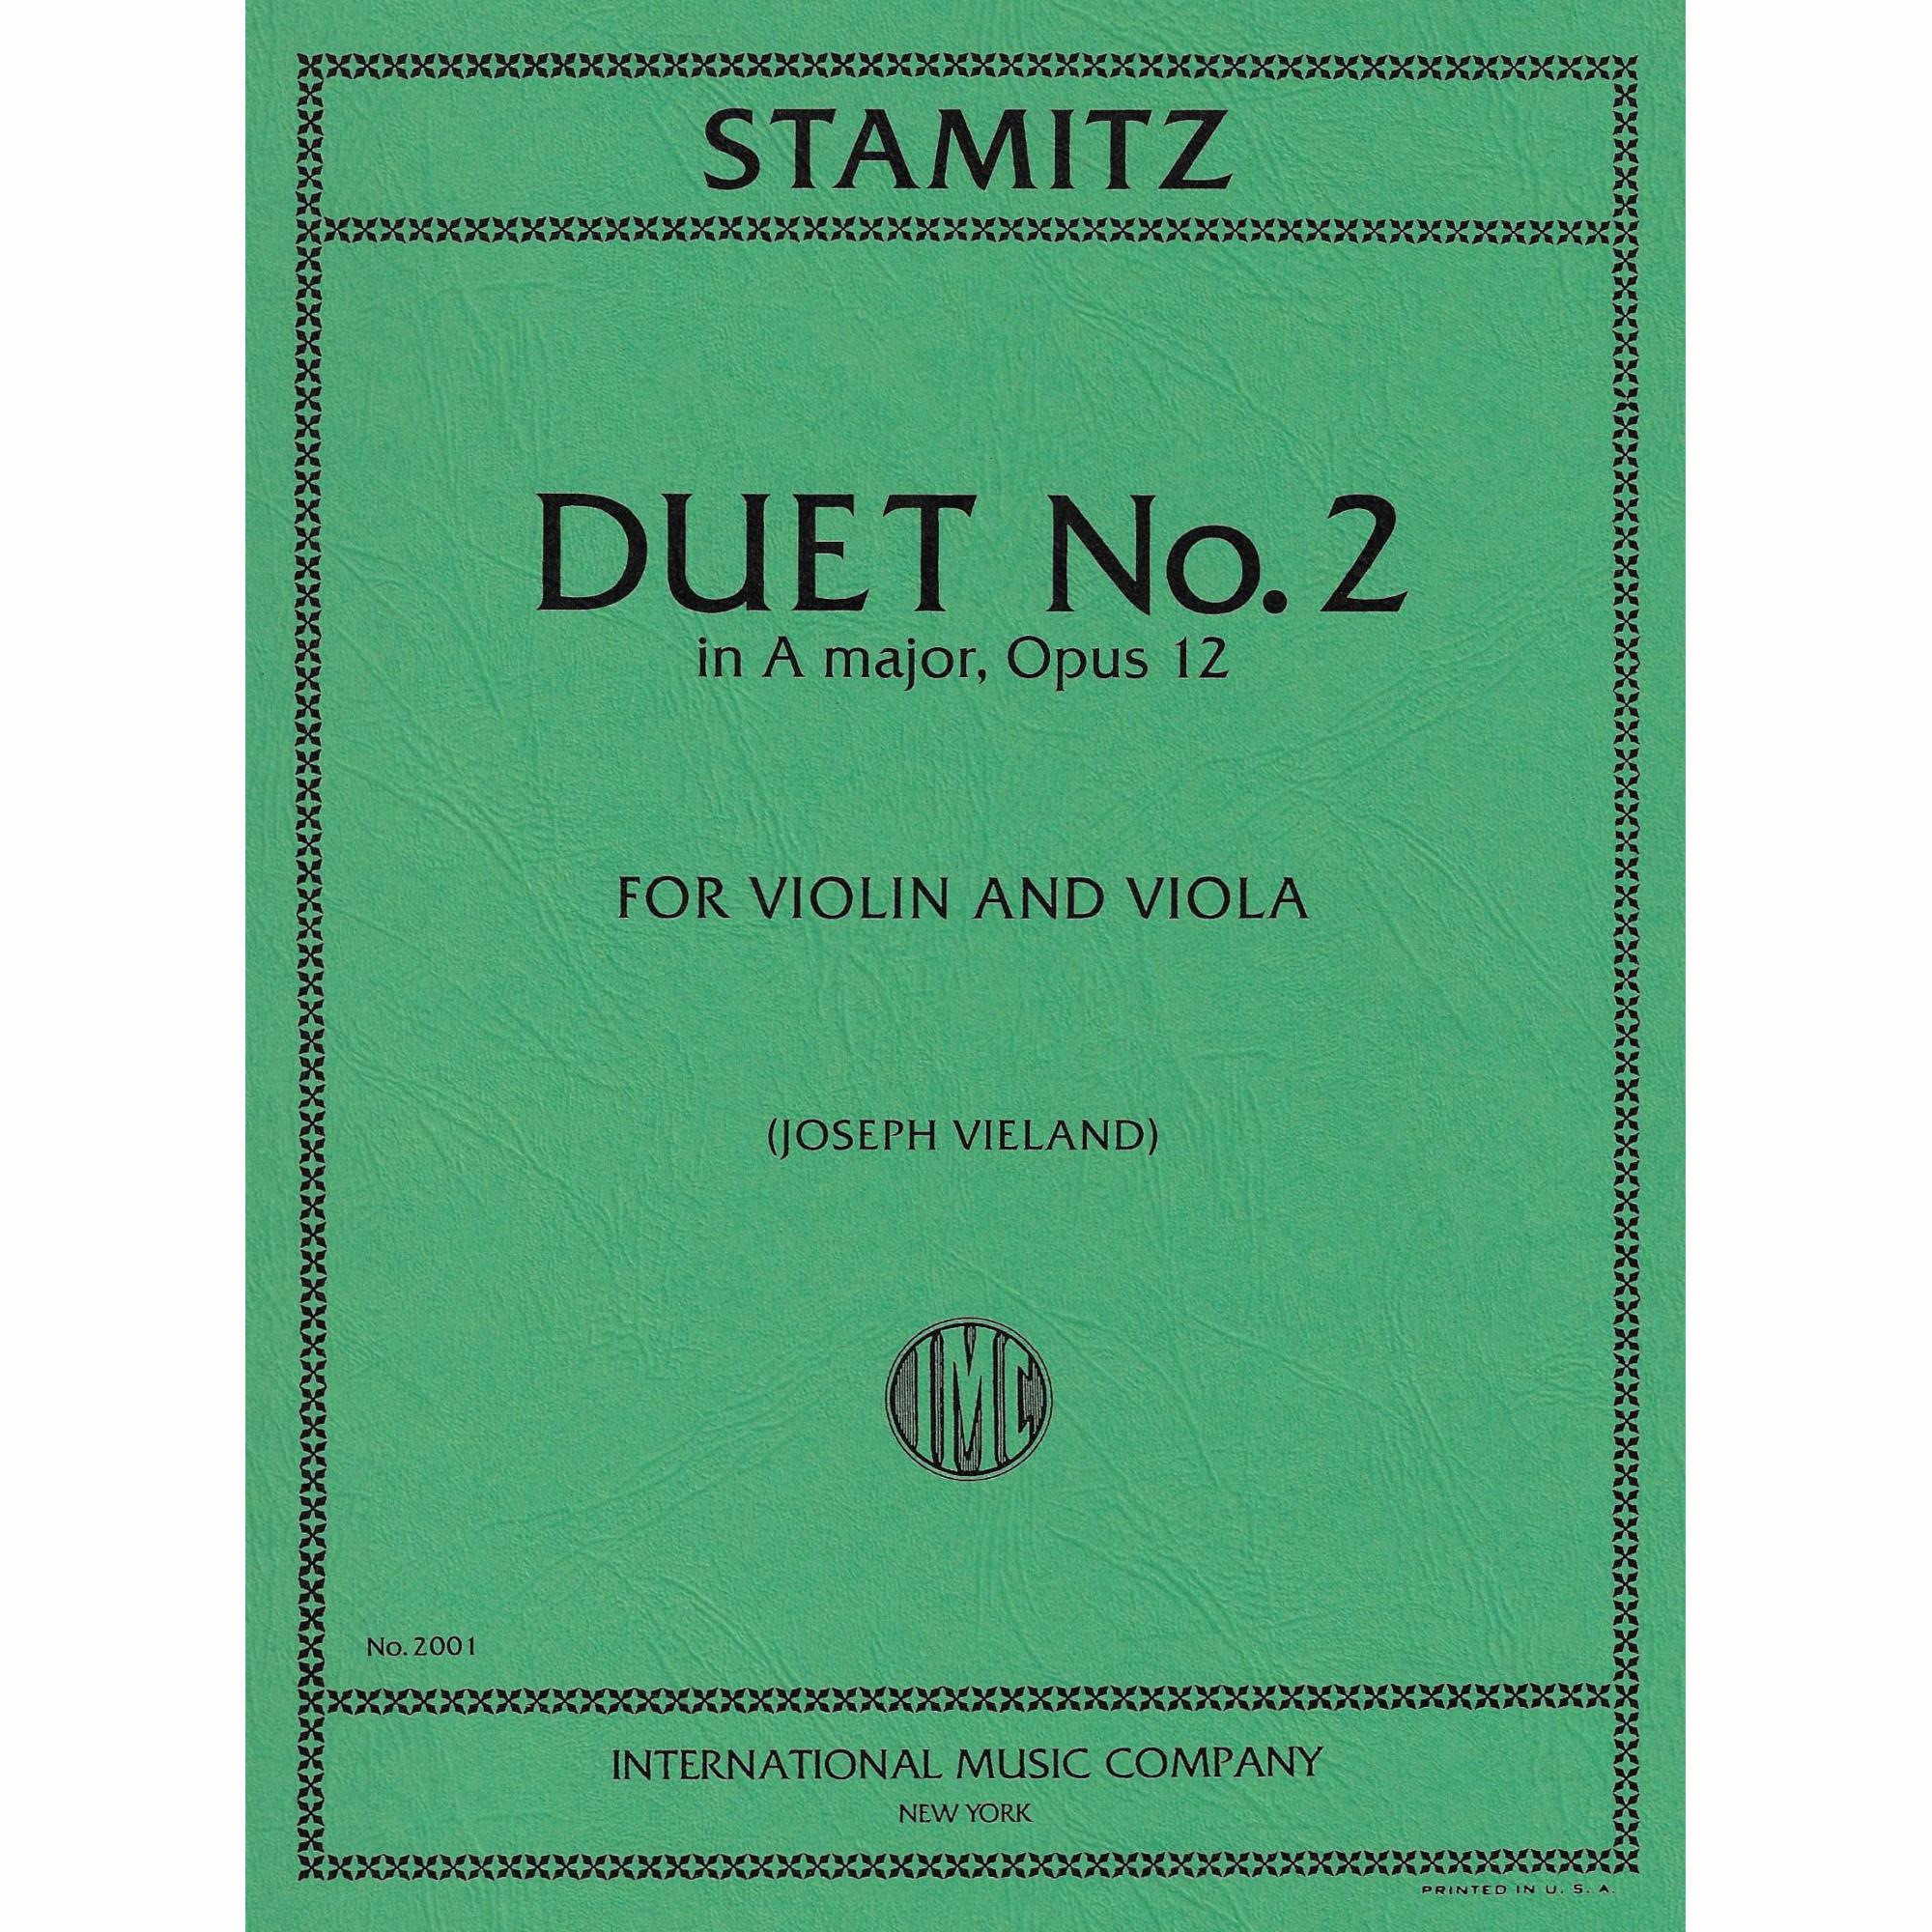 Stamitz -- Duet No. 2 in A Major, Op. 12 for Violin and Viola